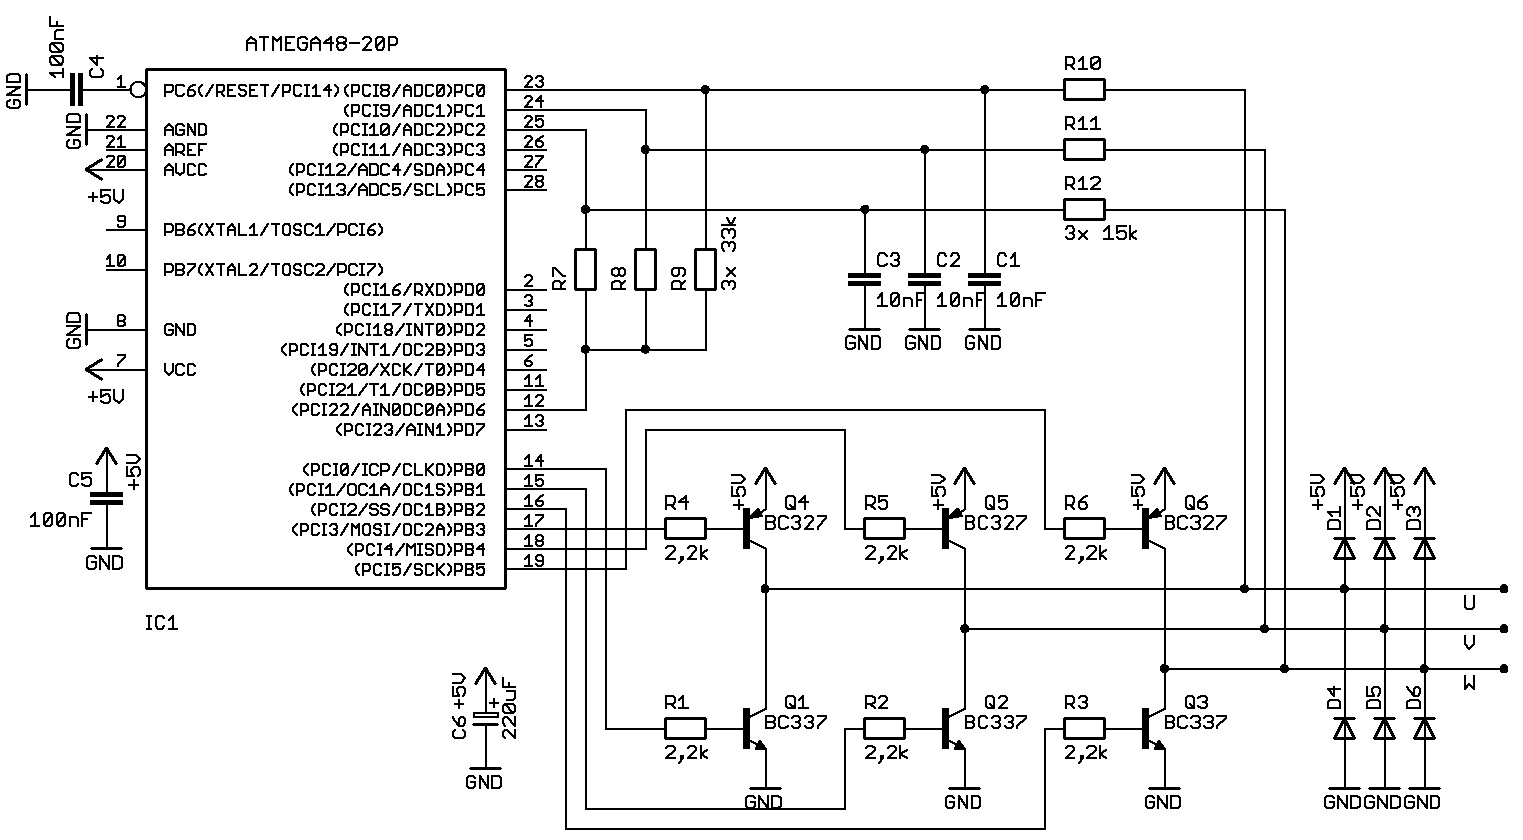 festplatten motor zum drehen bringen - Mikrocontroller.net